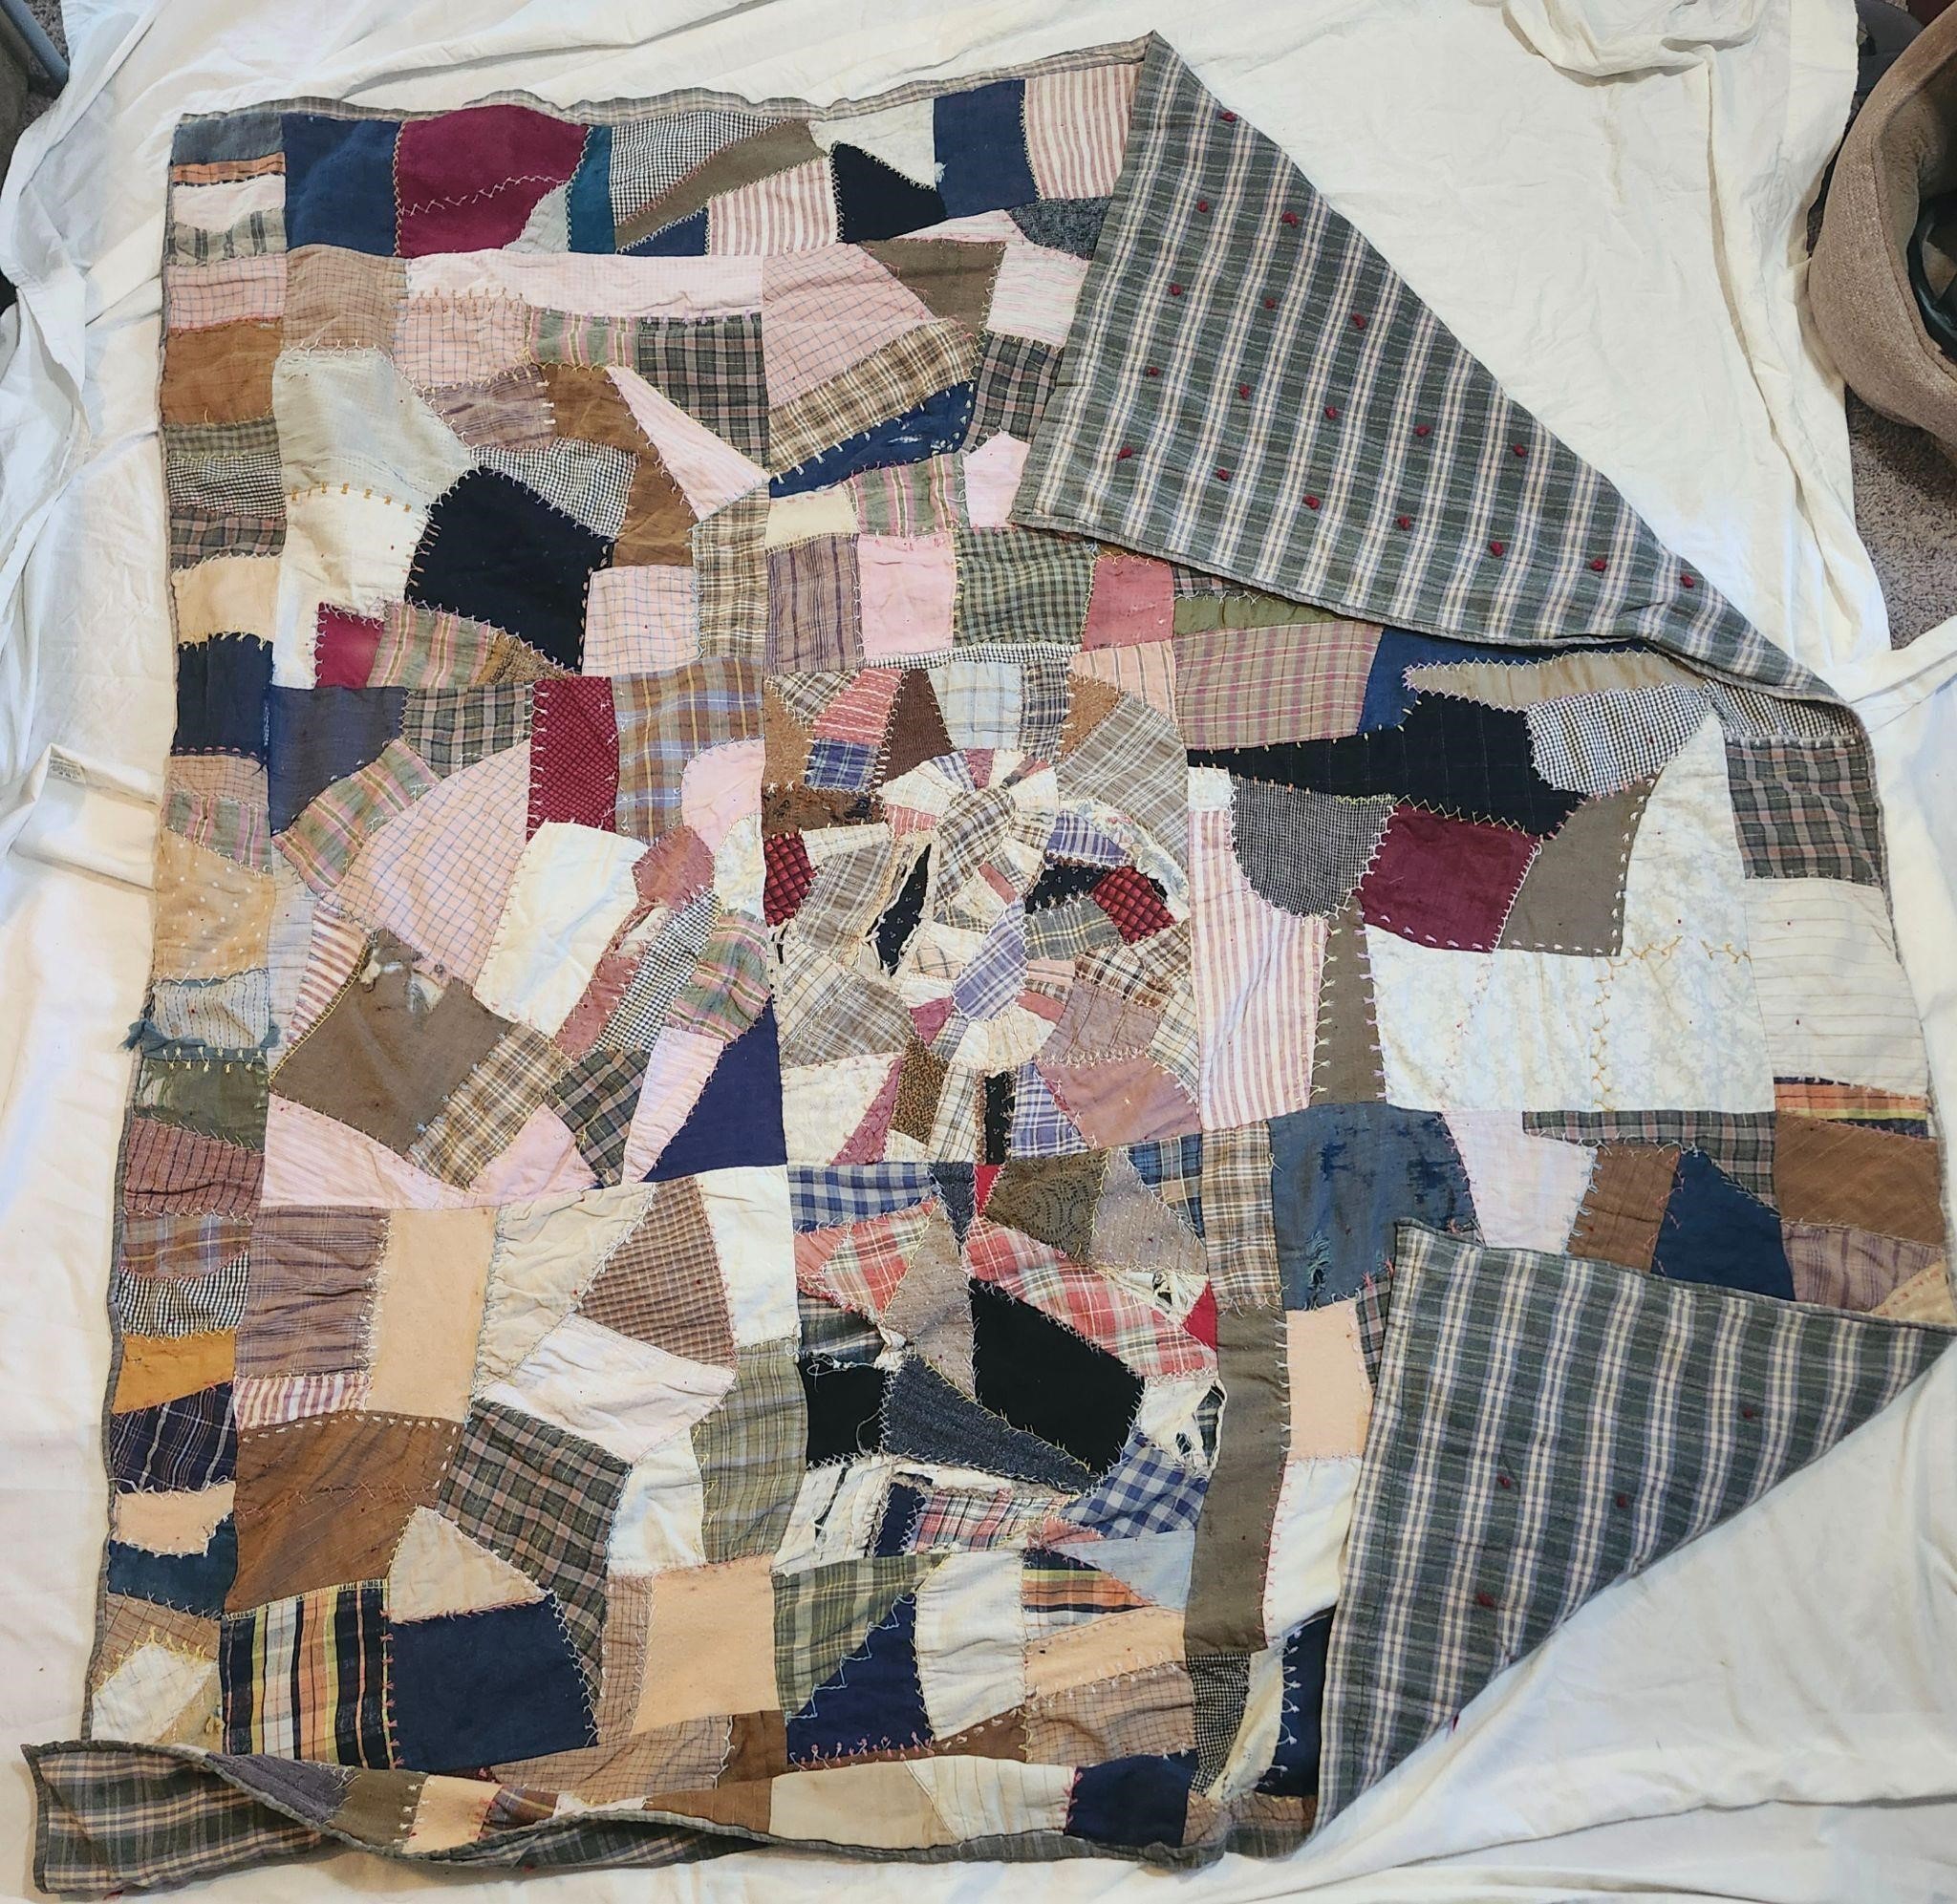 vintage handmade twin size quilt - has heavy wear